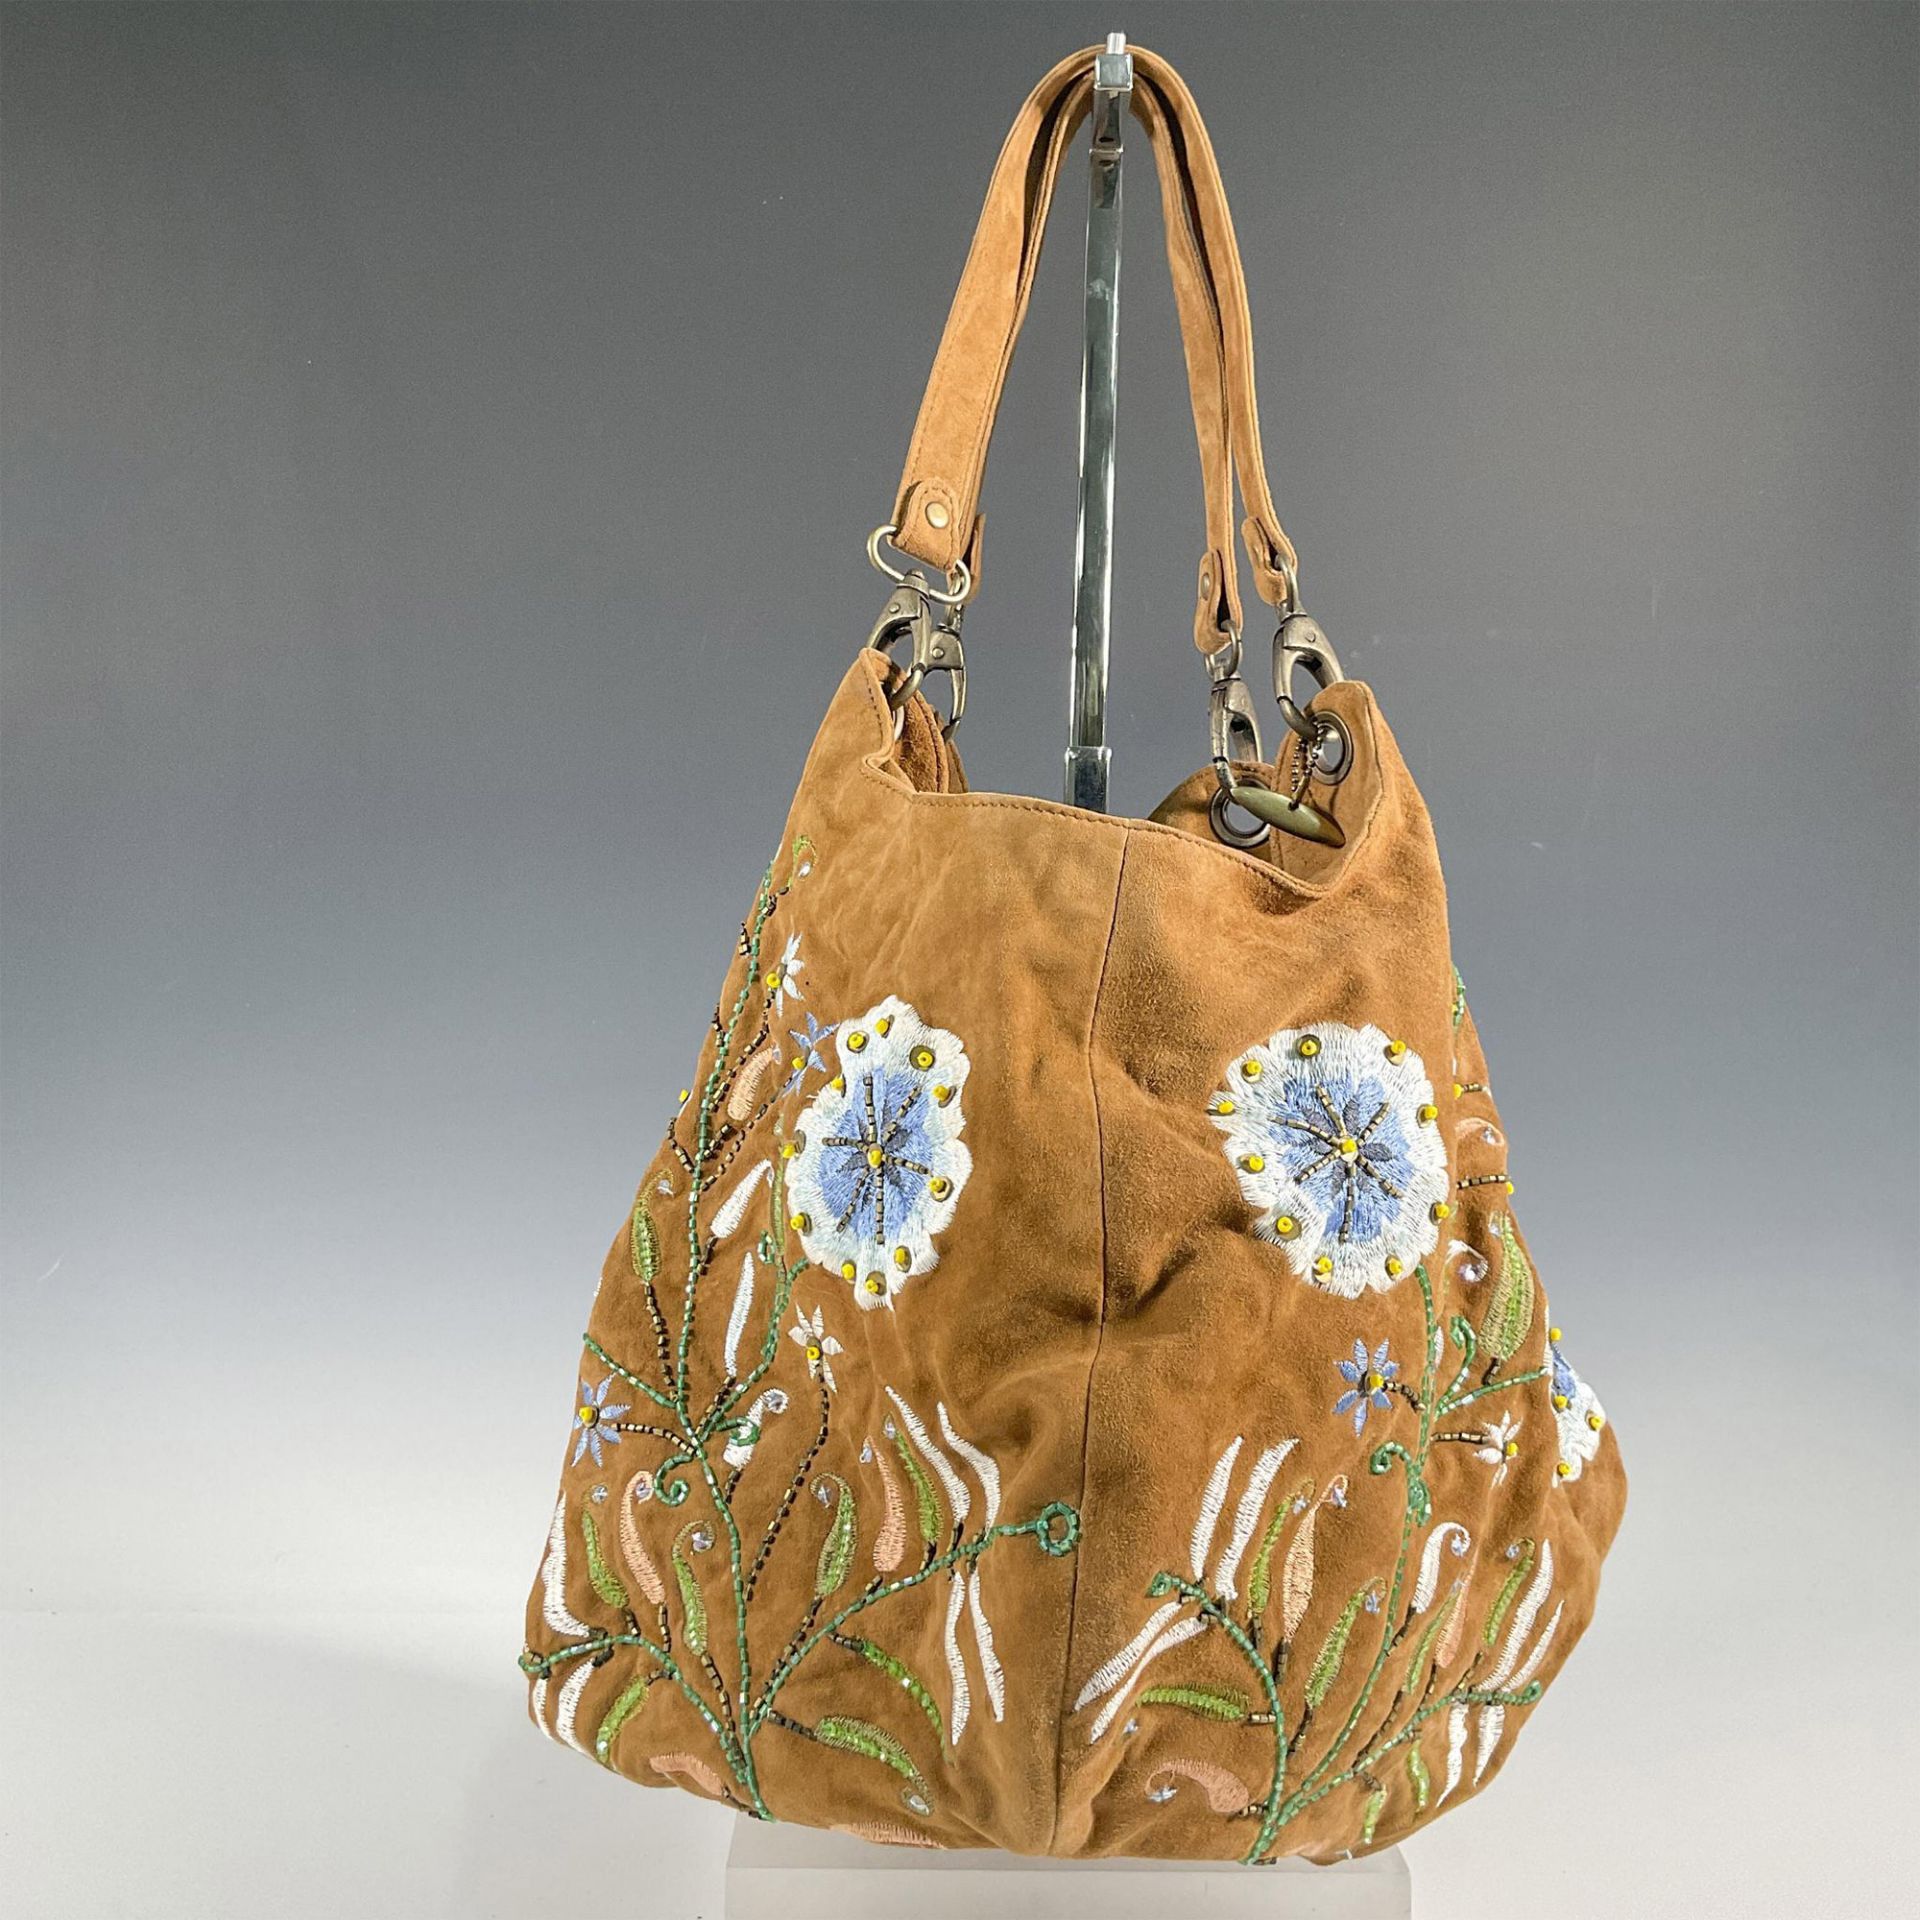 Mary Frances Street Hobo Bag, Feel Good - Image 2 of 4